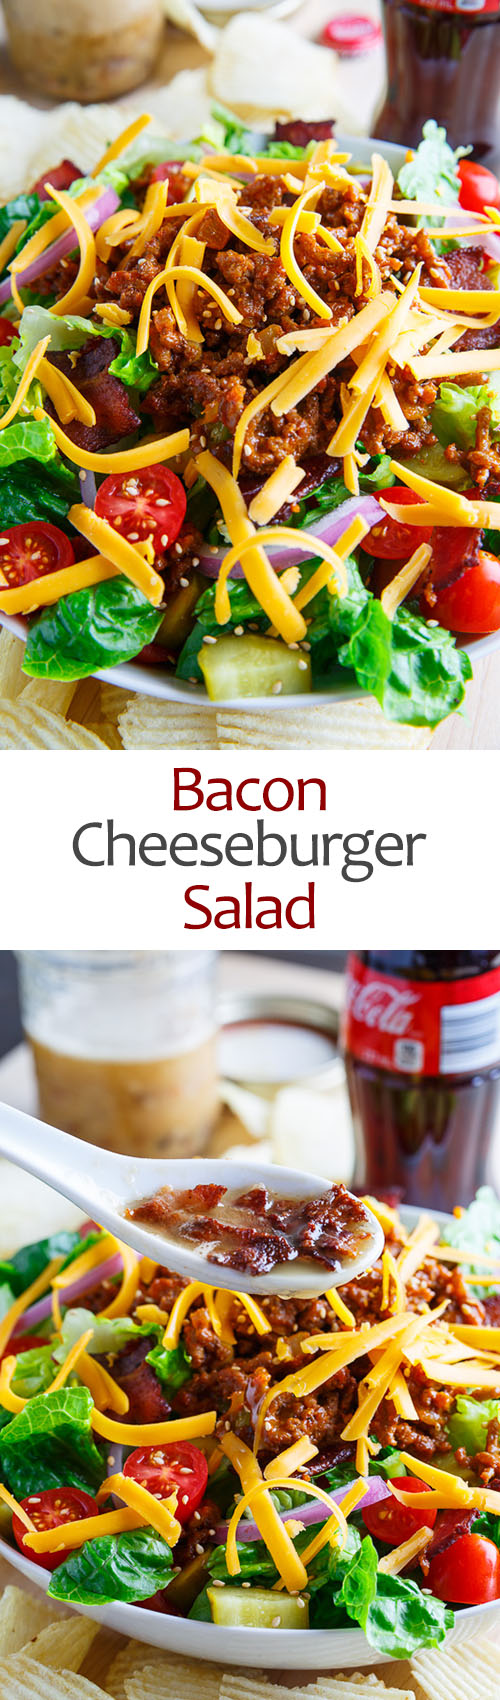 Bacon Cheeseburger Salad